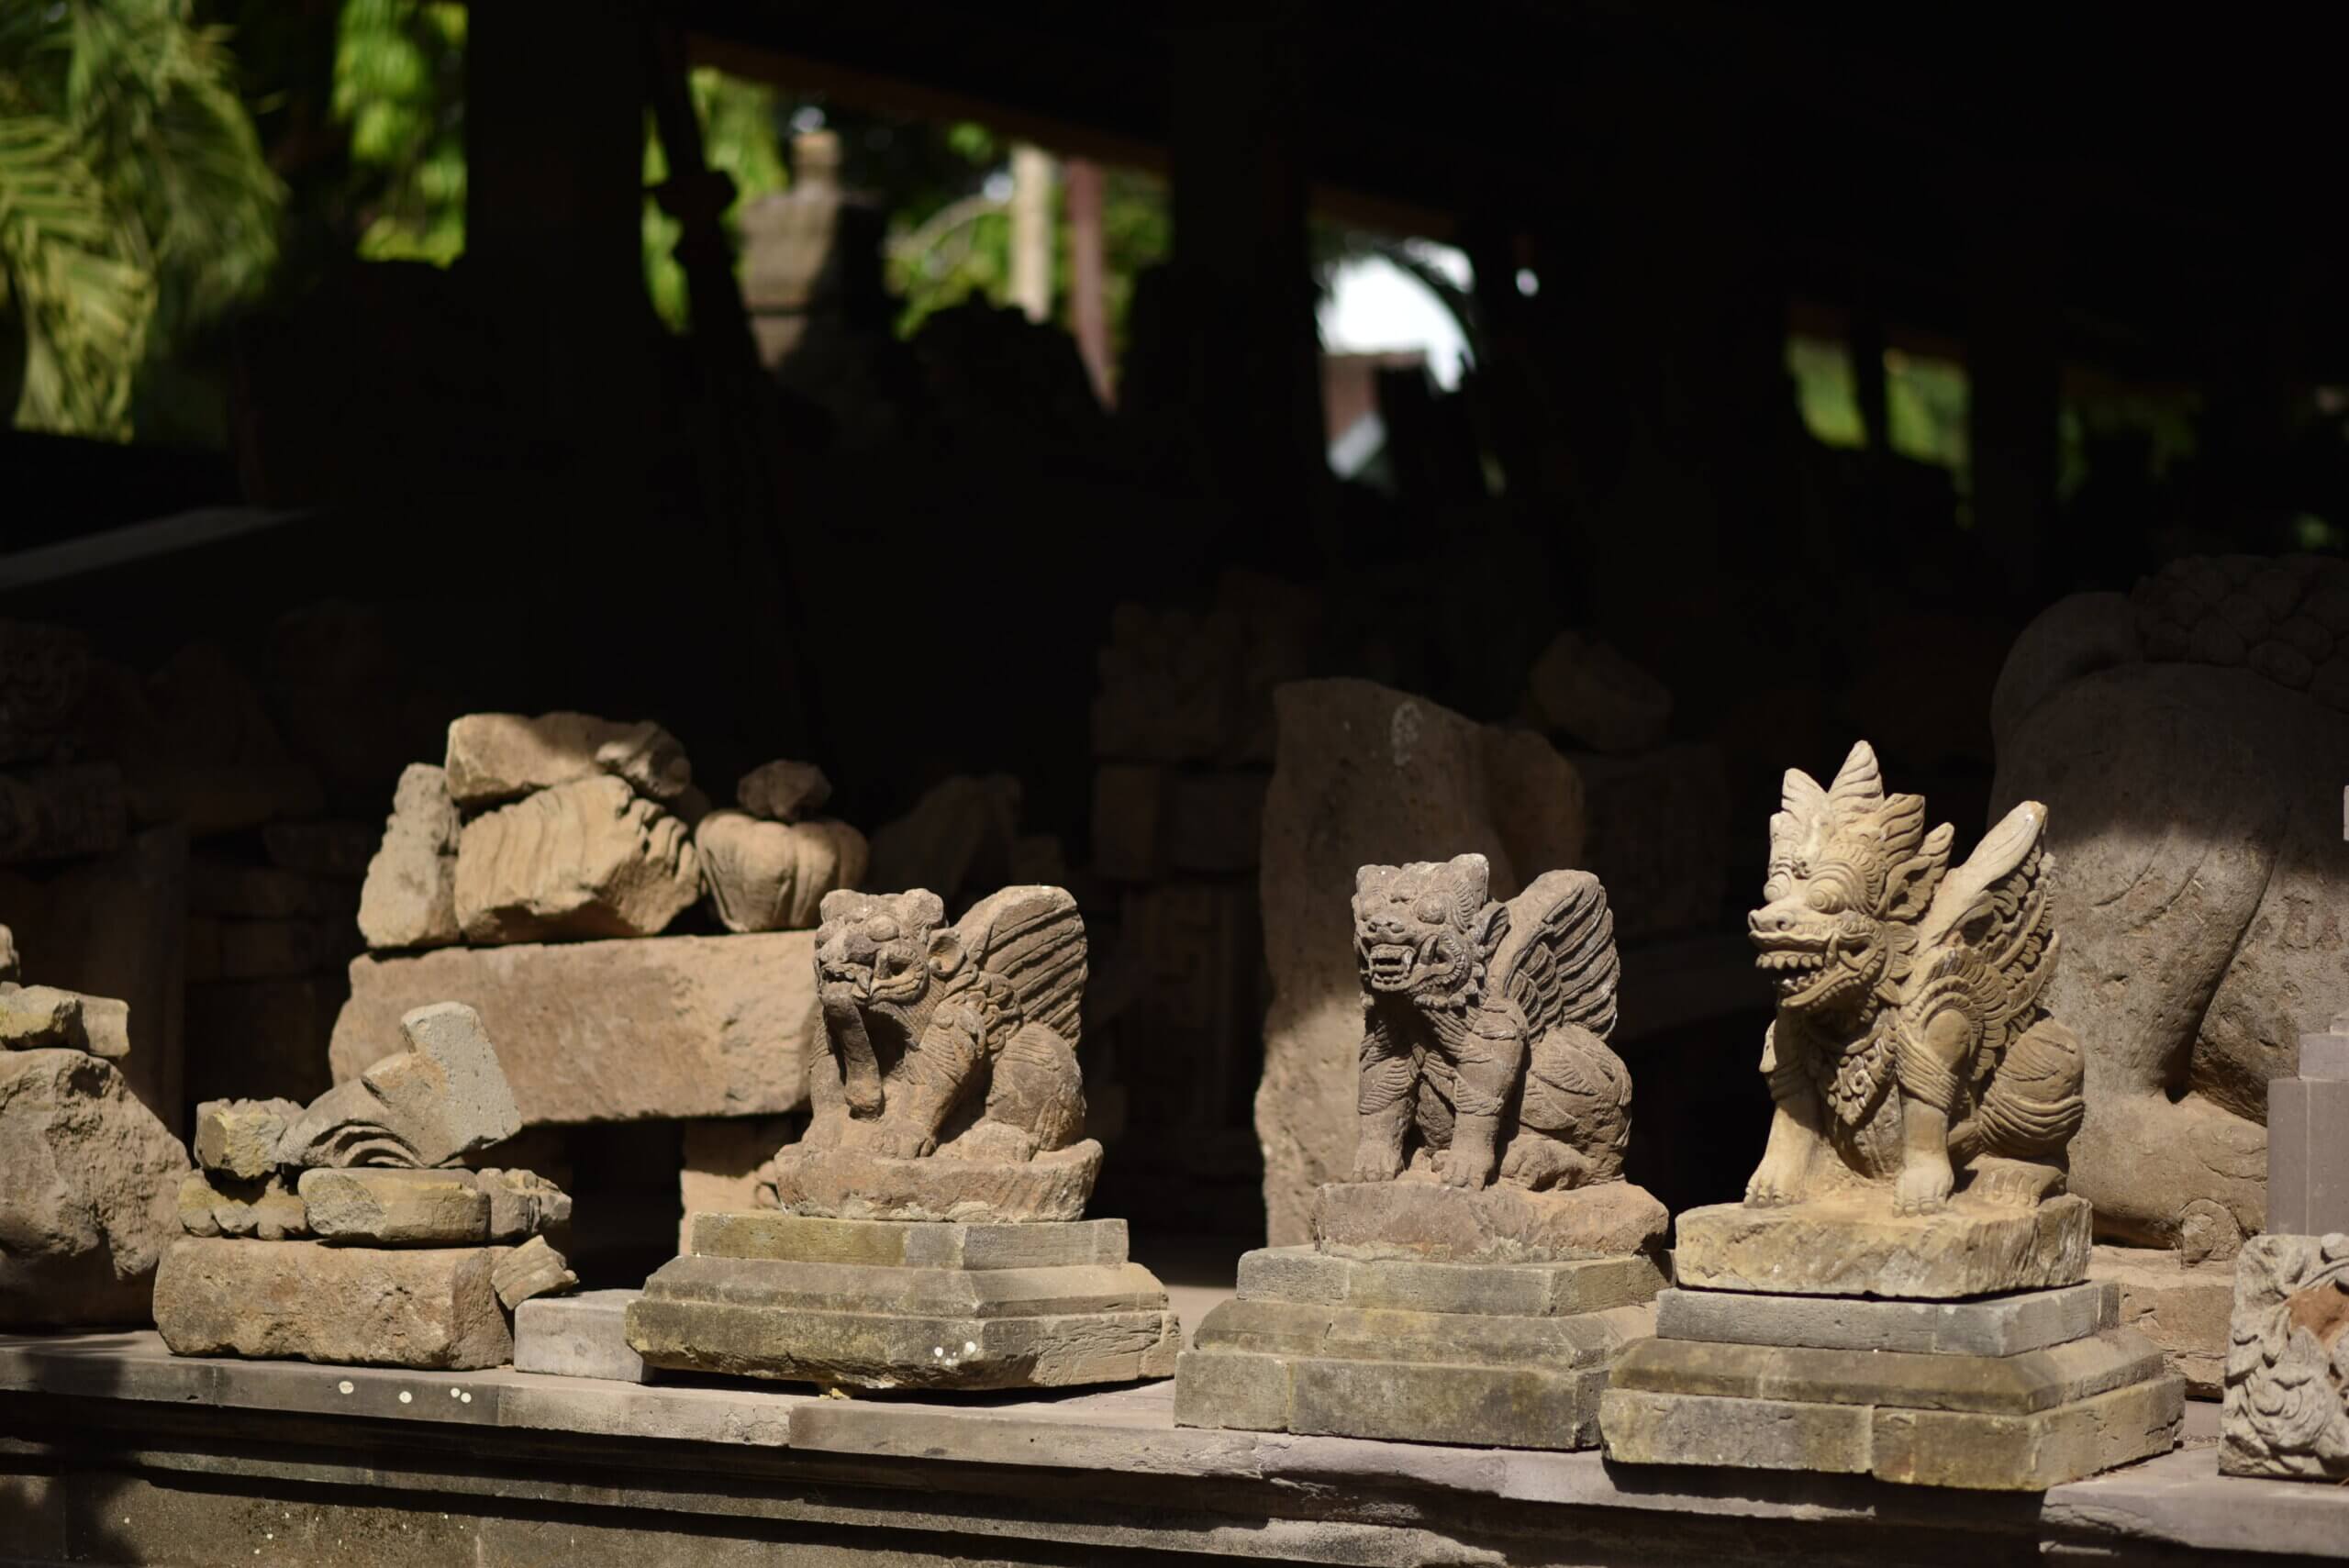 Petites statues representant le Barong